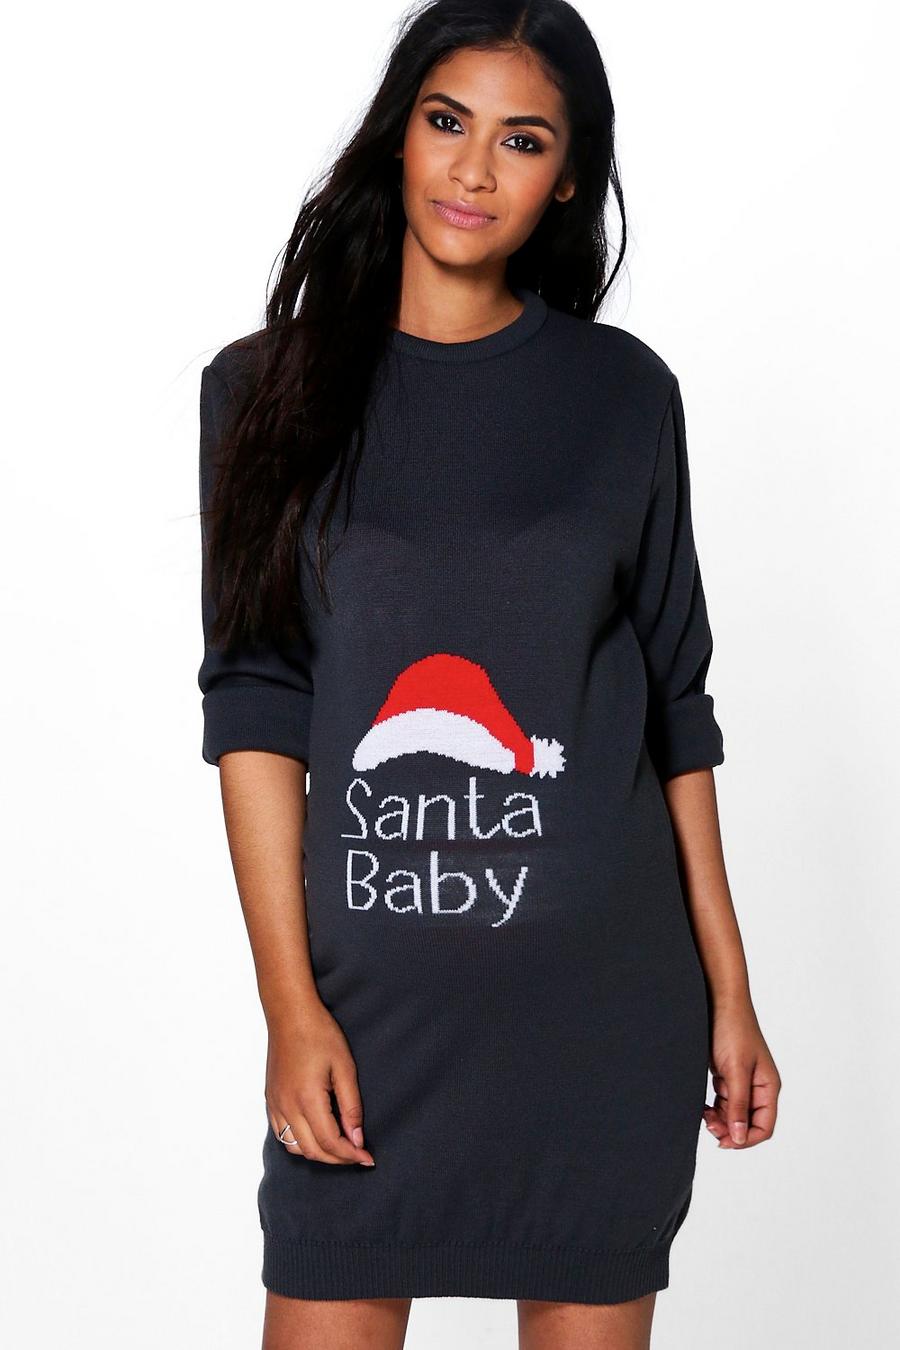 Grey Maternity 'Santa Baby' Christmas Jumper Dress